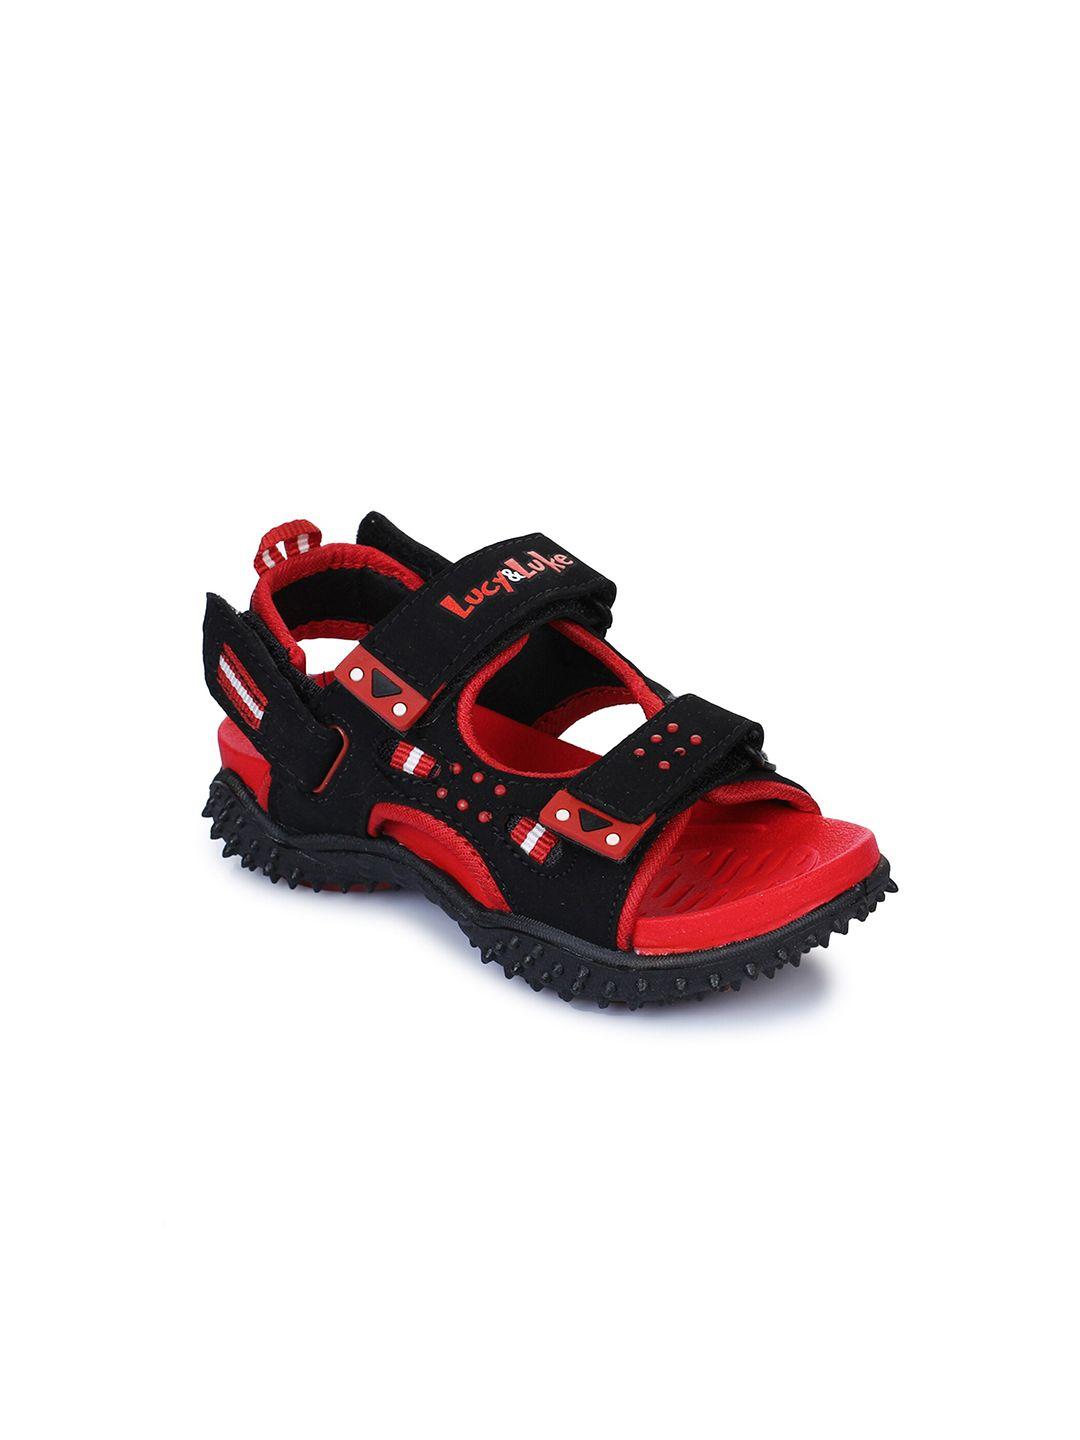 liberty unisex kids black & red comfort sandals